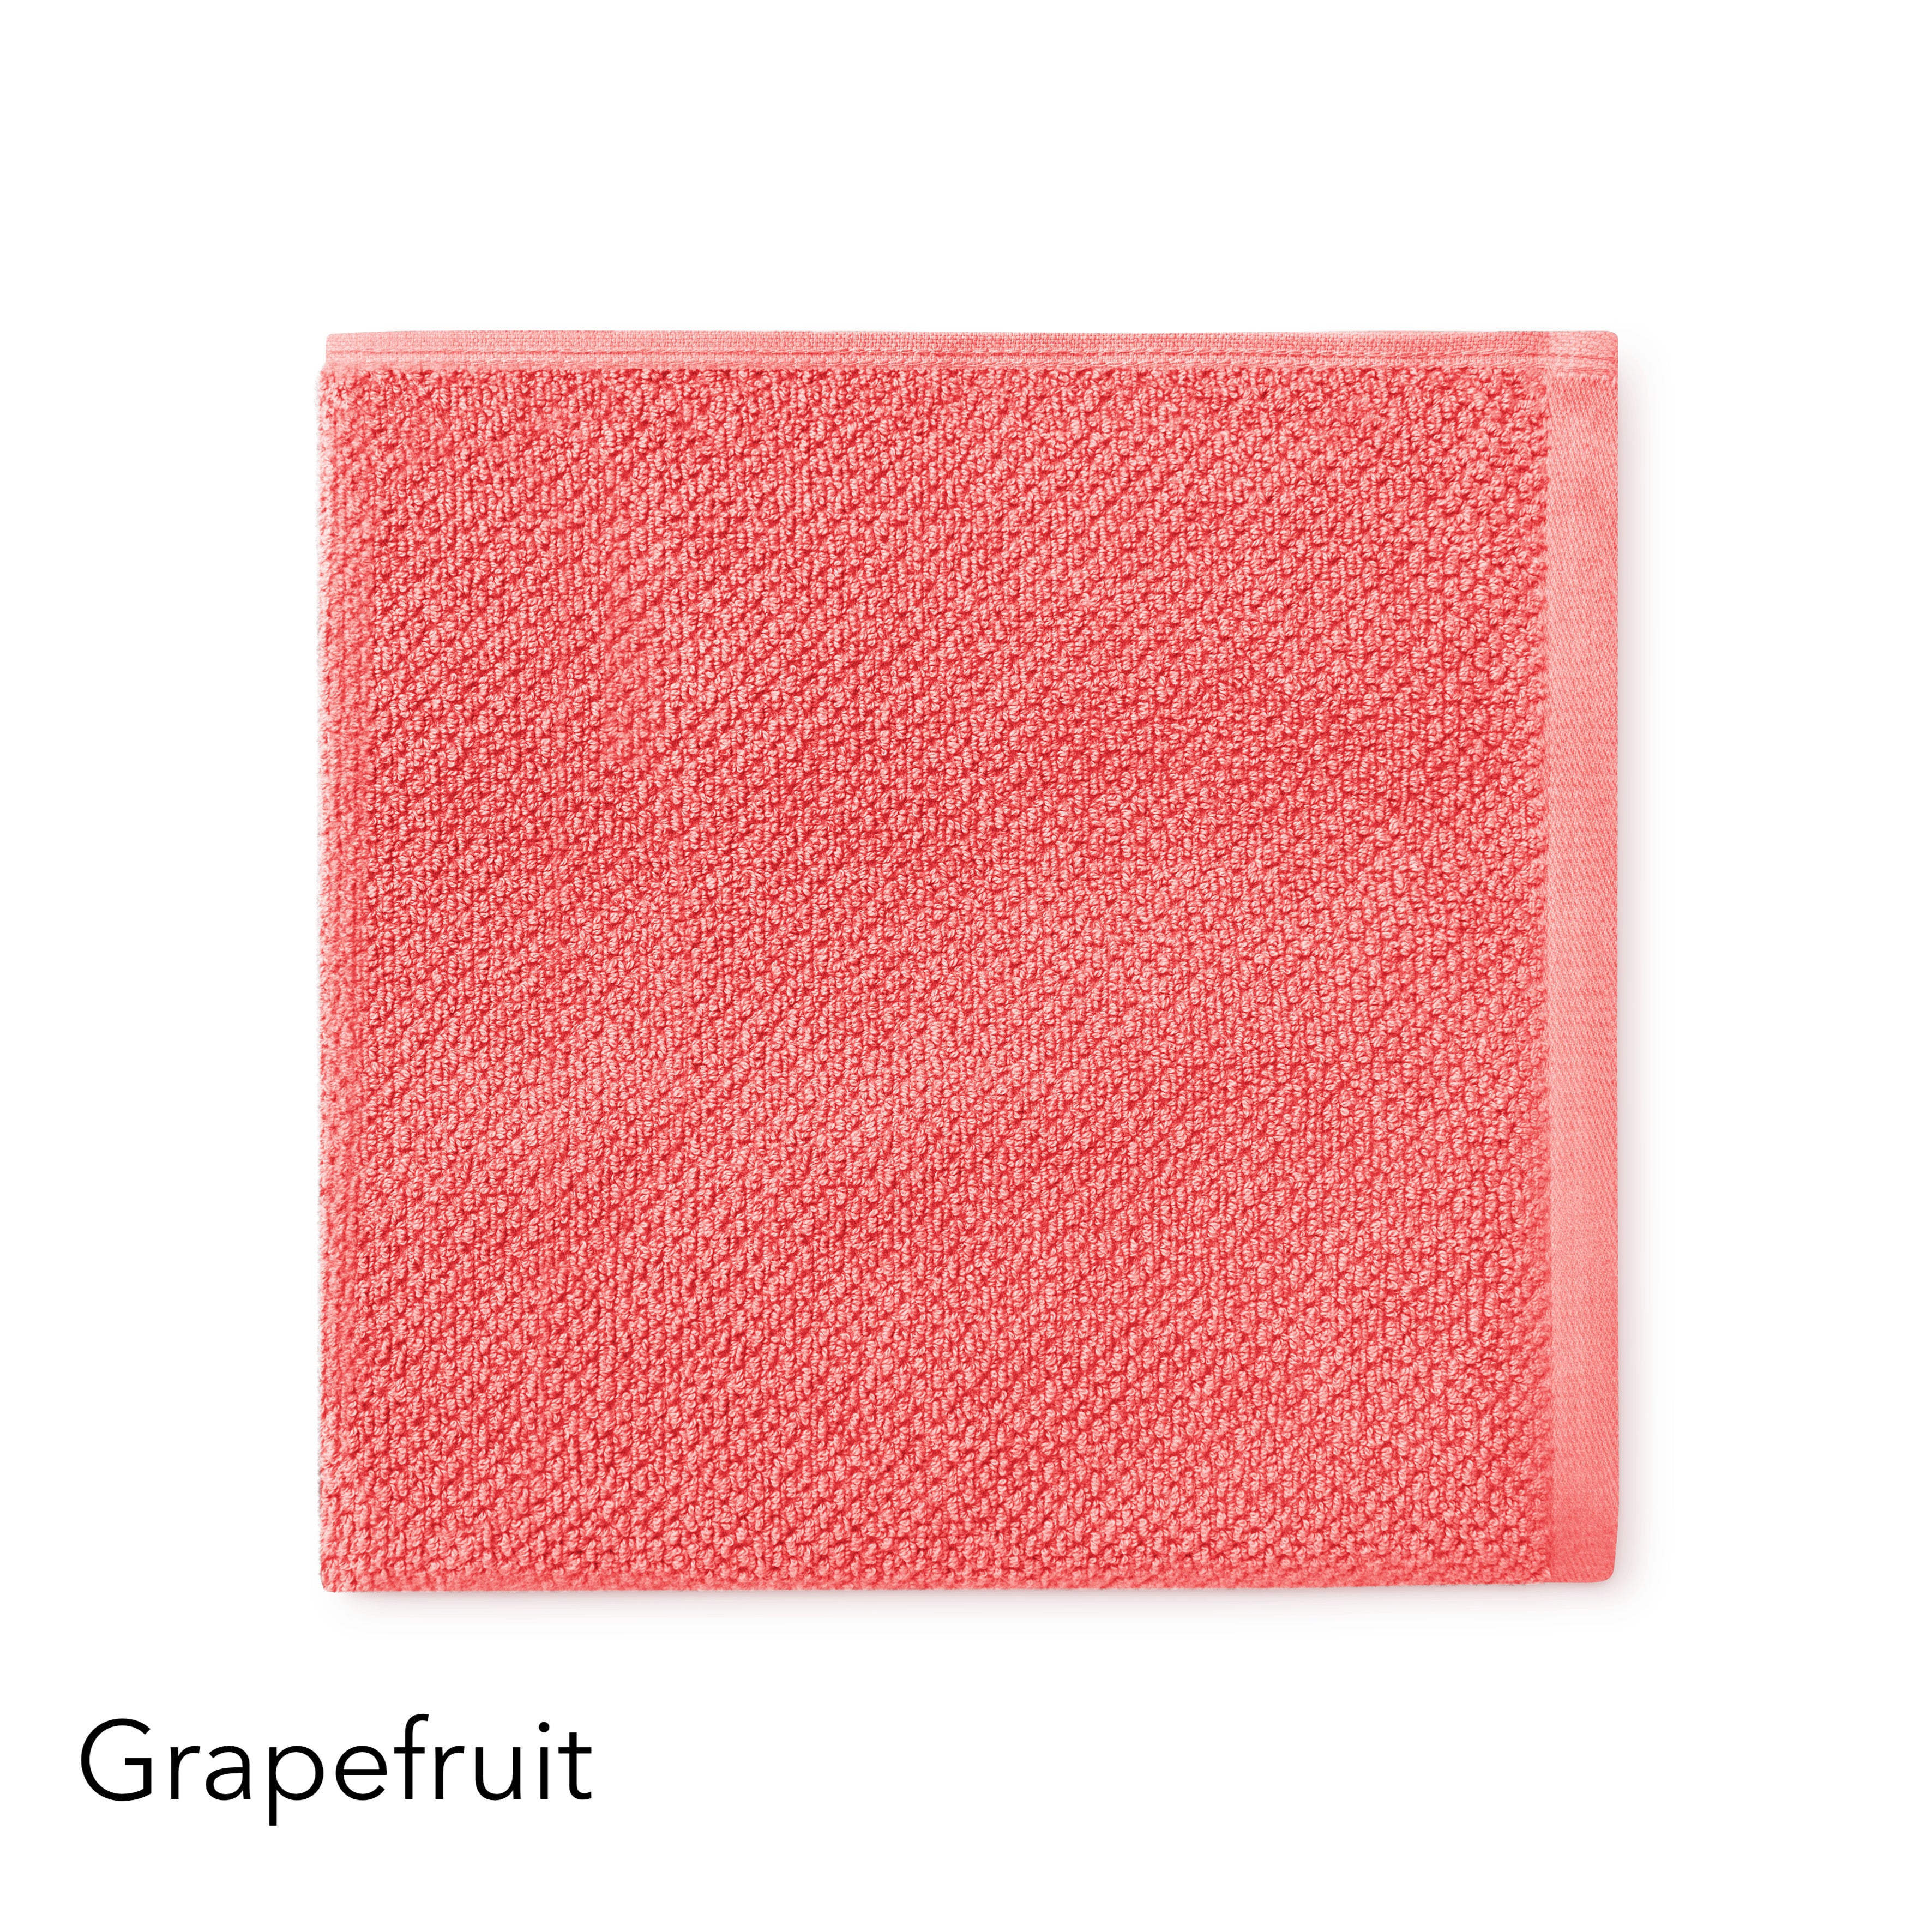 Buy grapefruit Nova Organic Cotton Towels